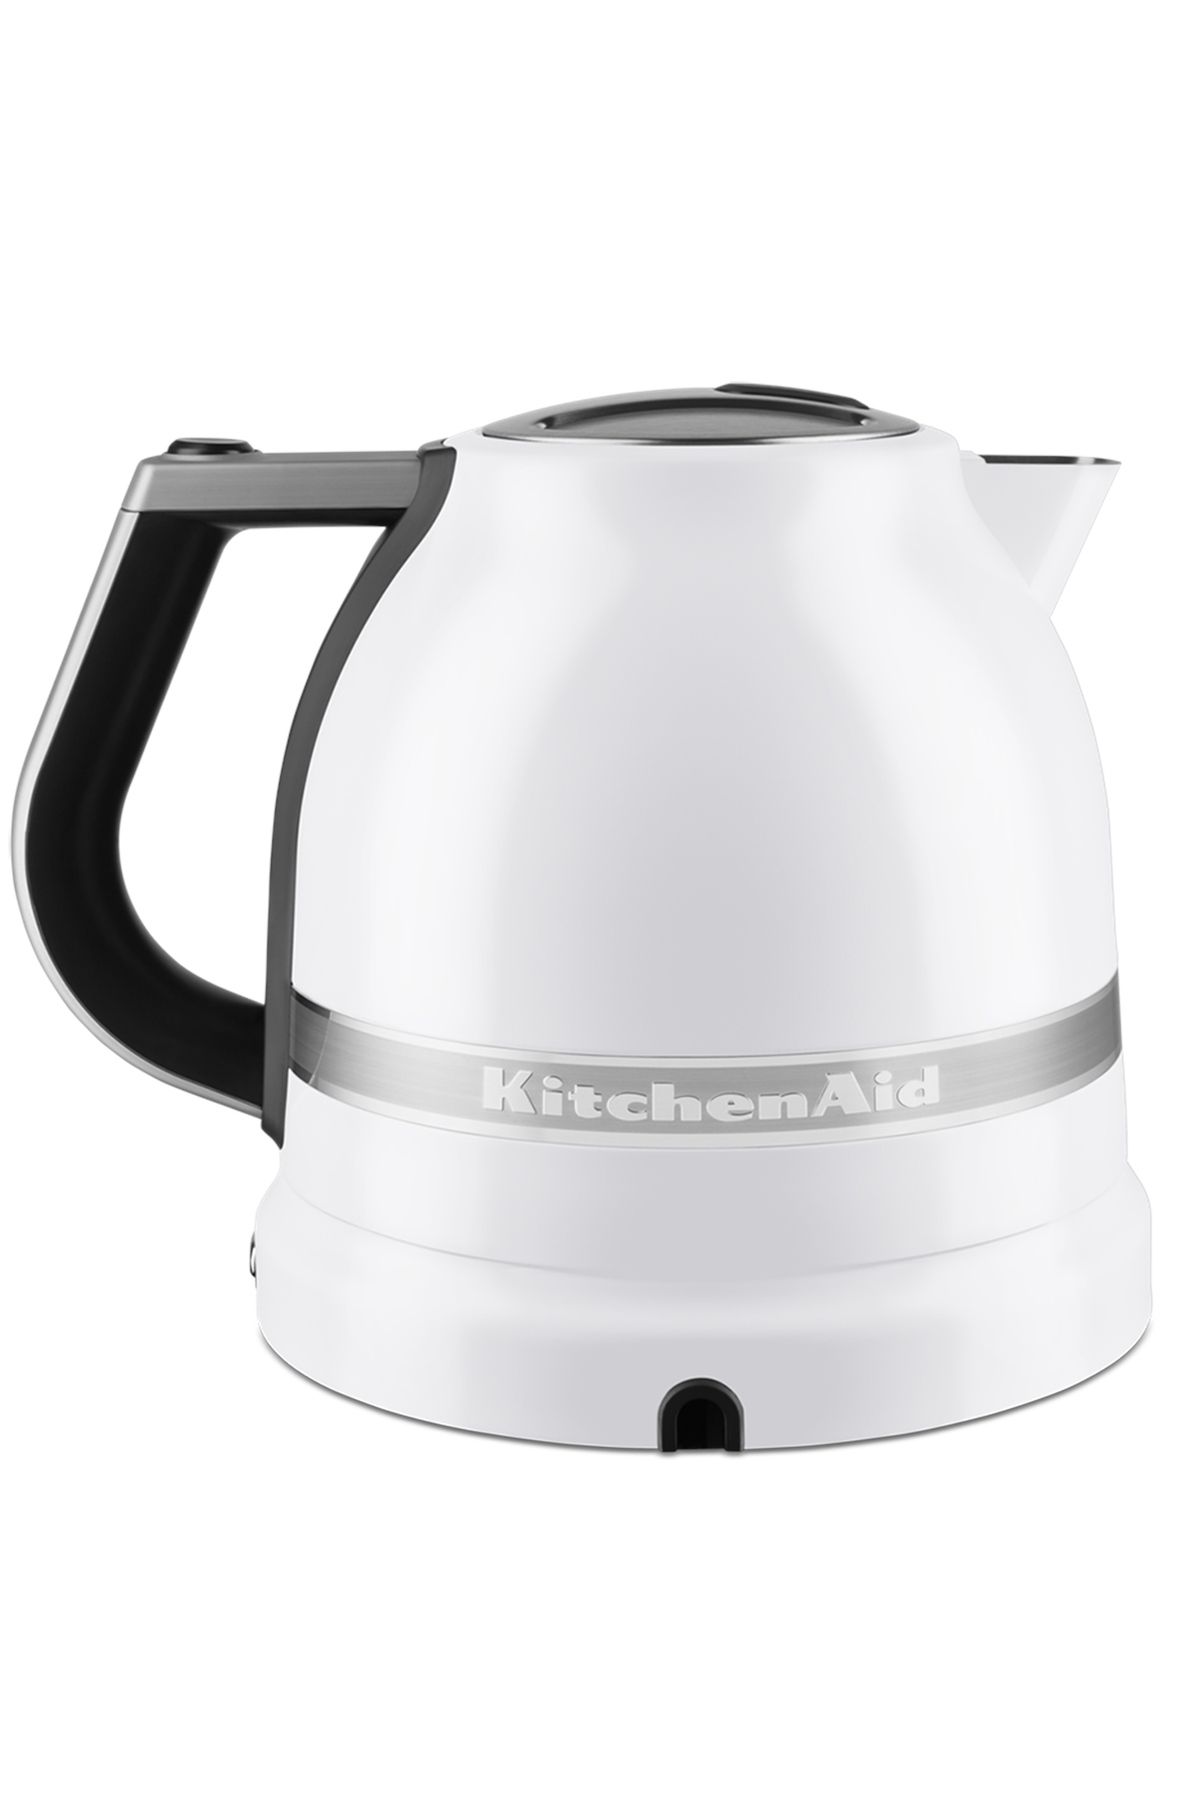 KitchenAid KEK1722WH 1.7 Liter Stainless Steel White Electric Kettle -  120V, 1500W